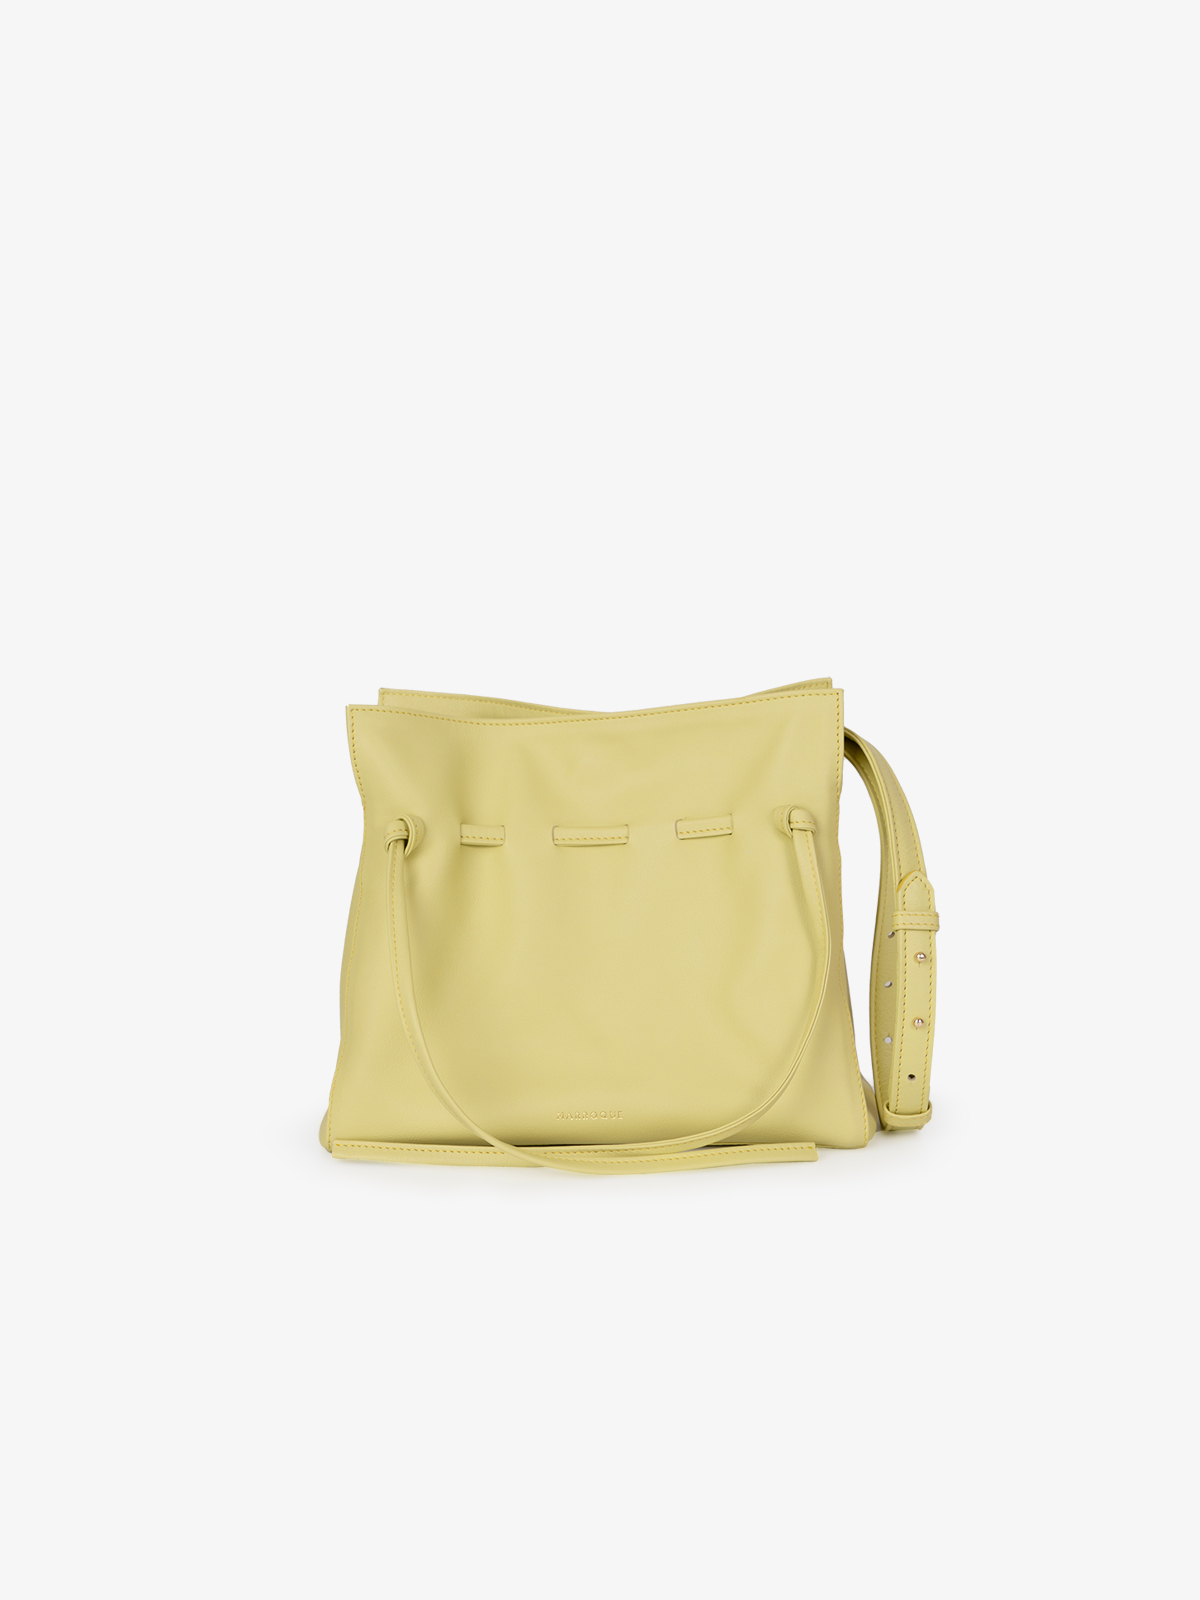 Marroque wendy 25 tote bag in Yellow. Genuine leather bag. Shoulder bag crossbody bag.